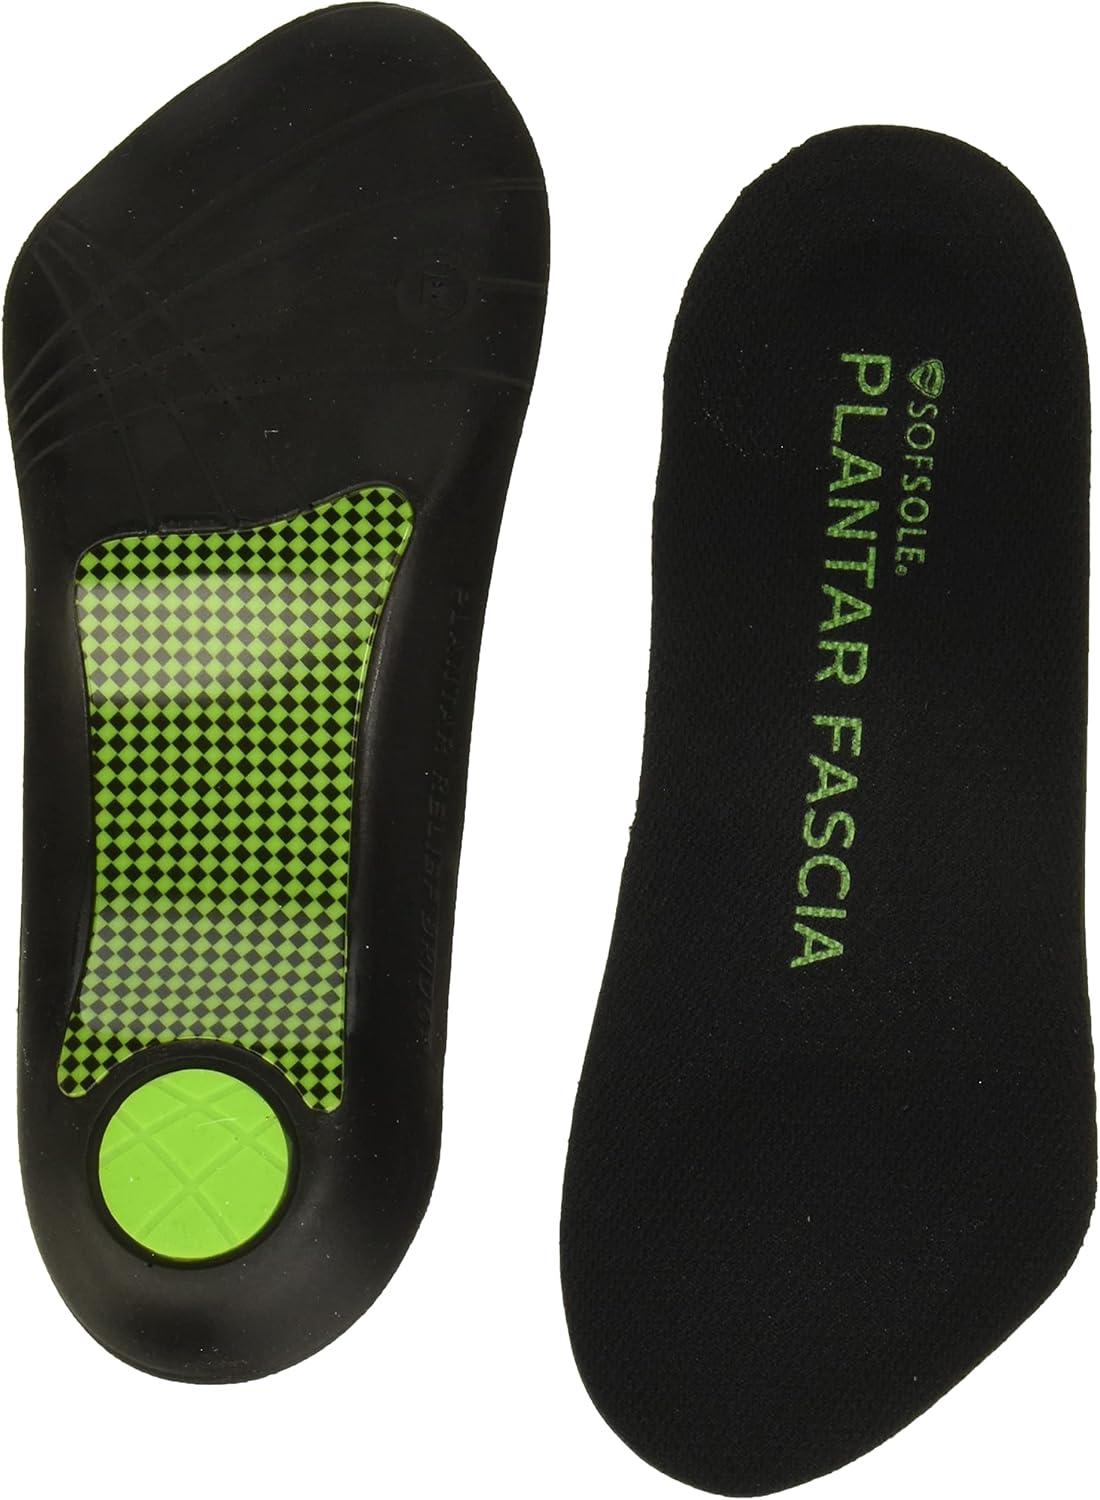 Sof Sole Insoles Men's PLANTAR FASCIA Support 34 Length Gel Shoe Insert